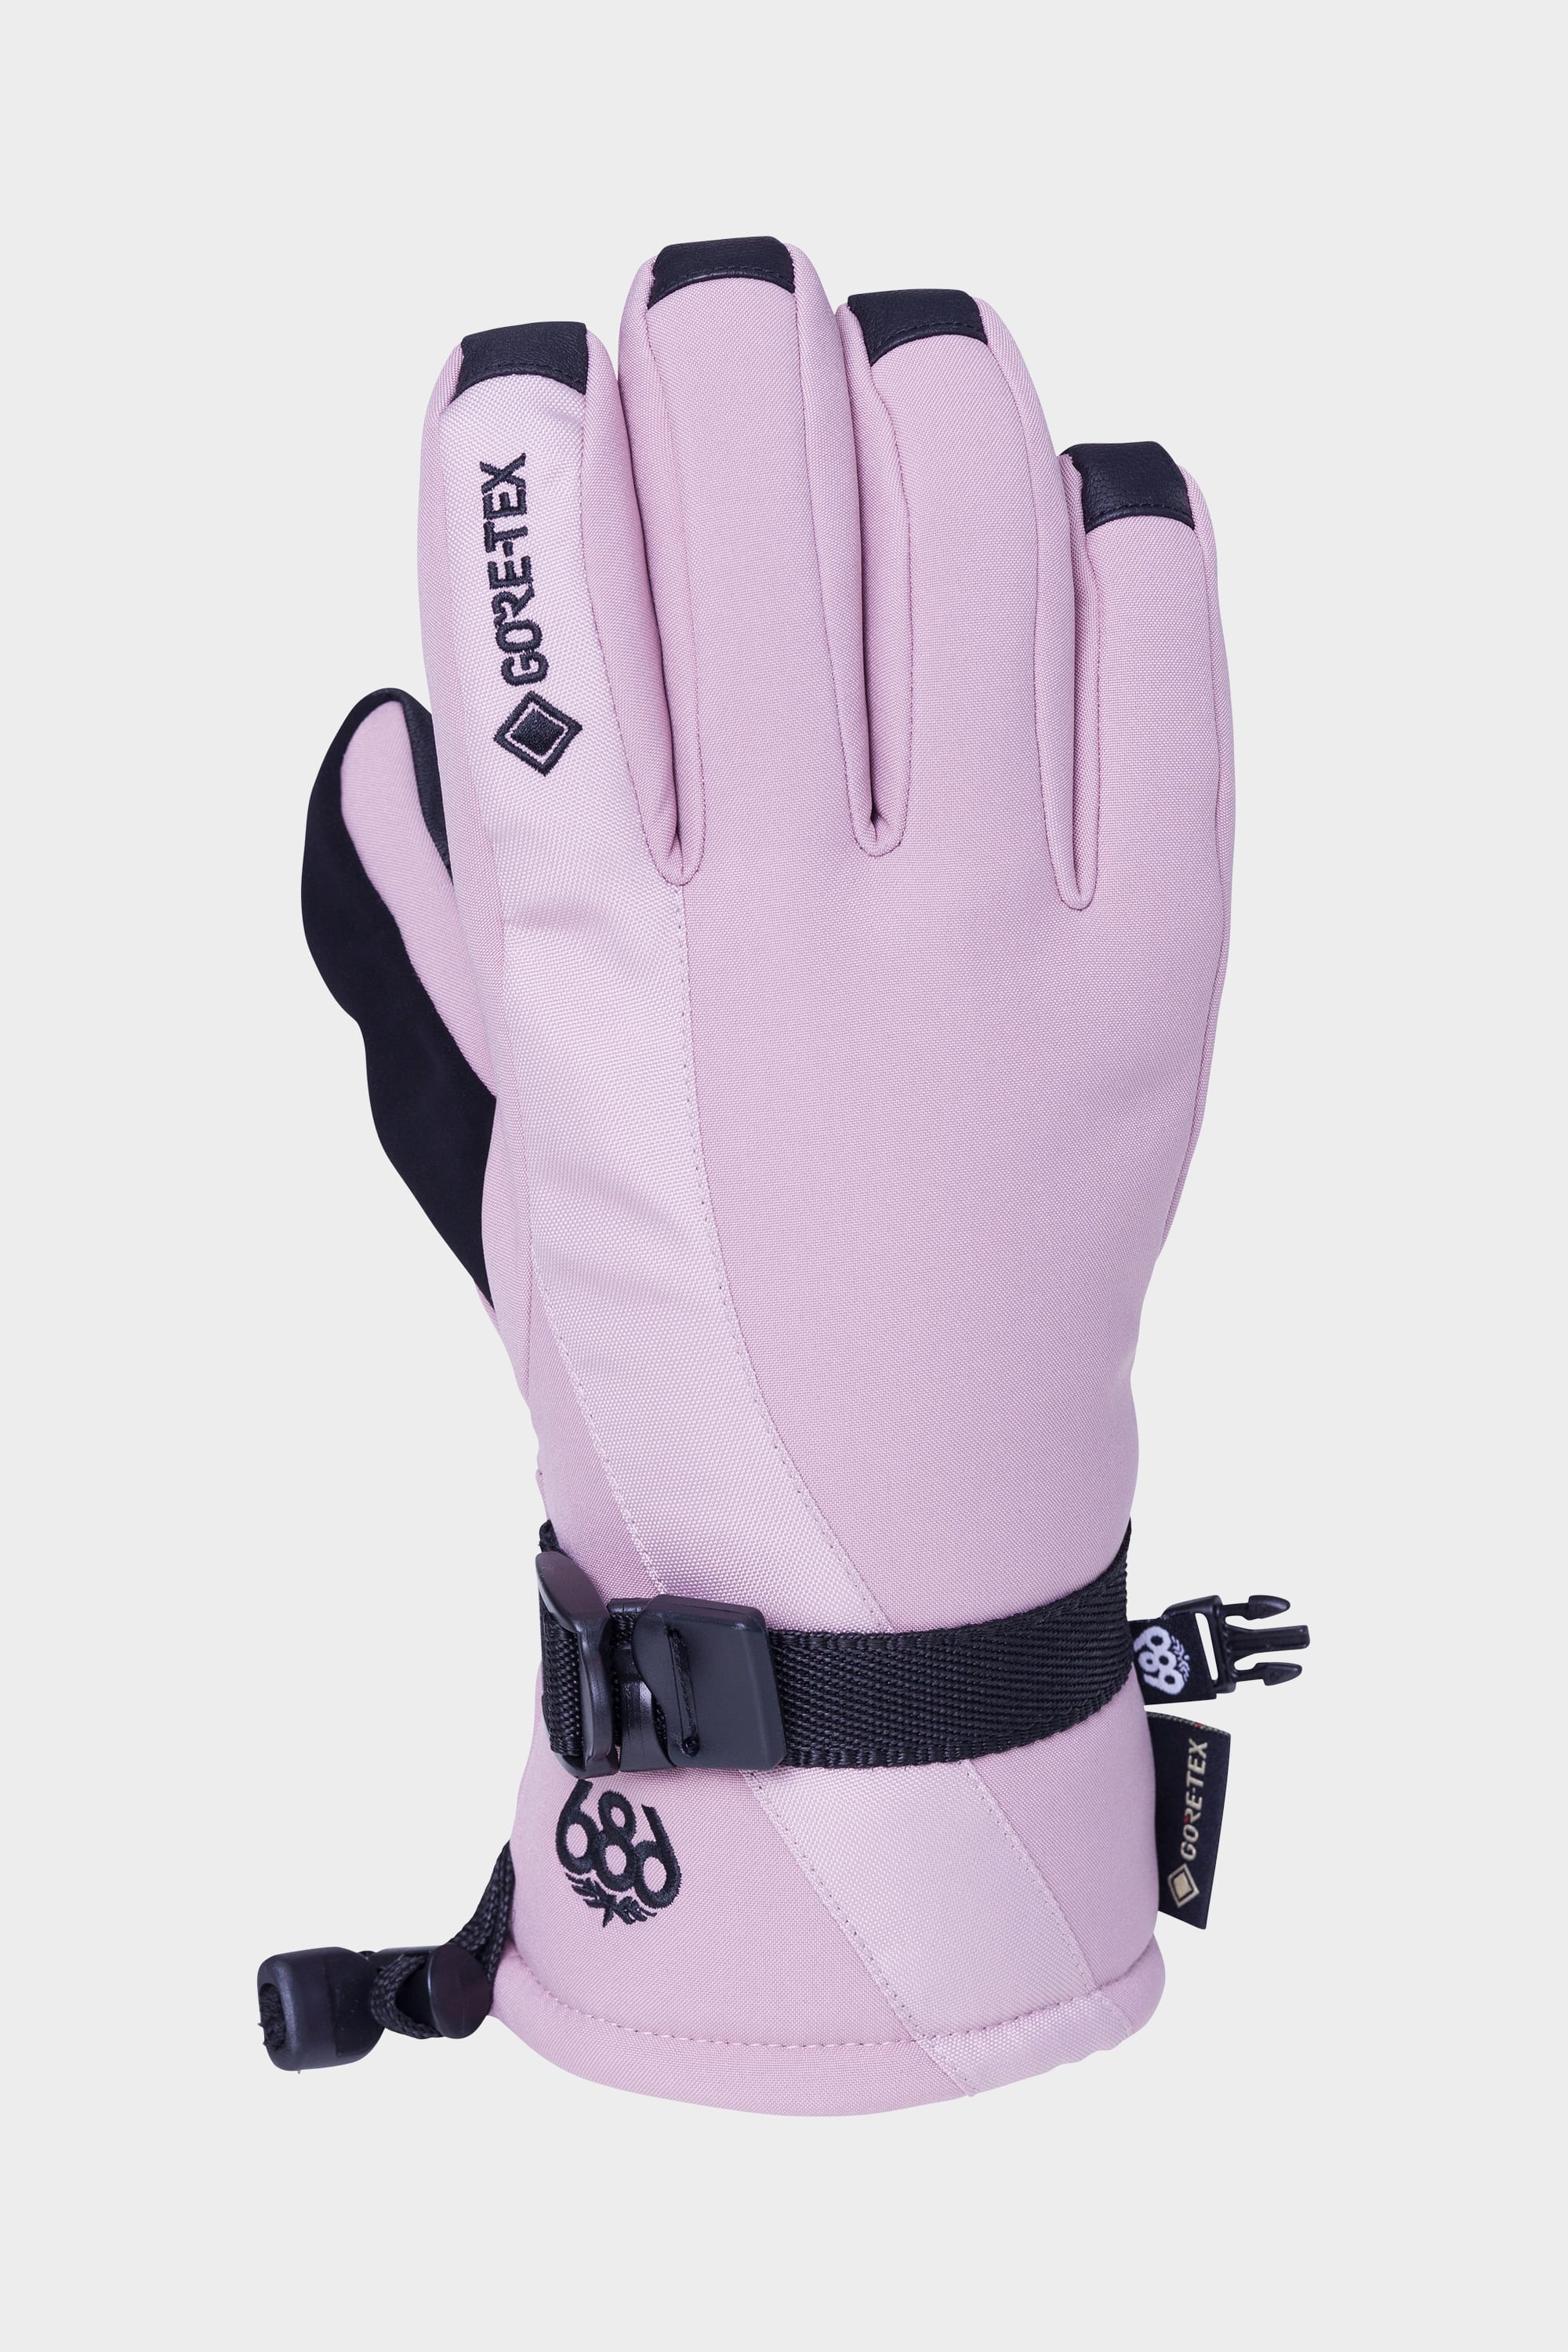 Gloves & Mitts – 686.com